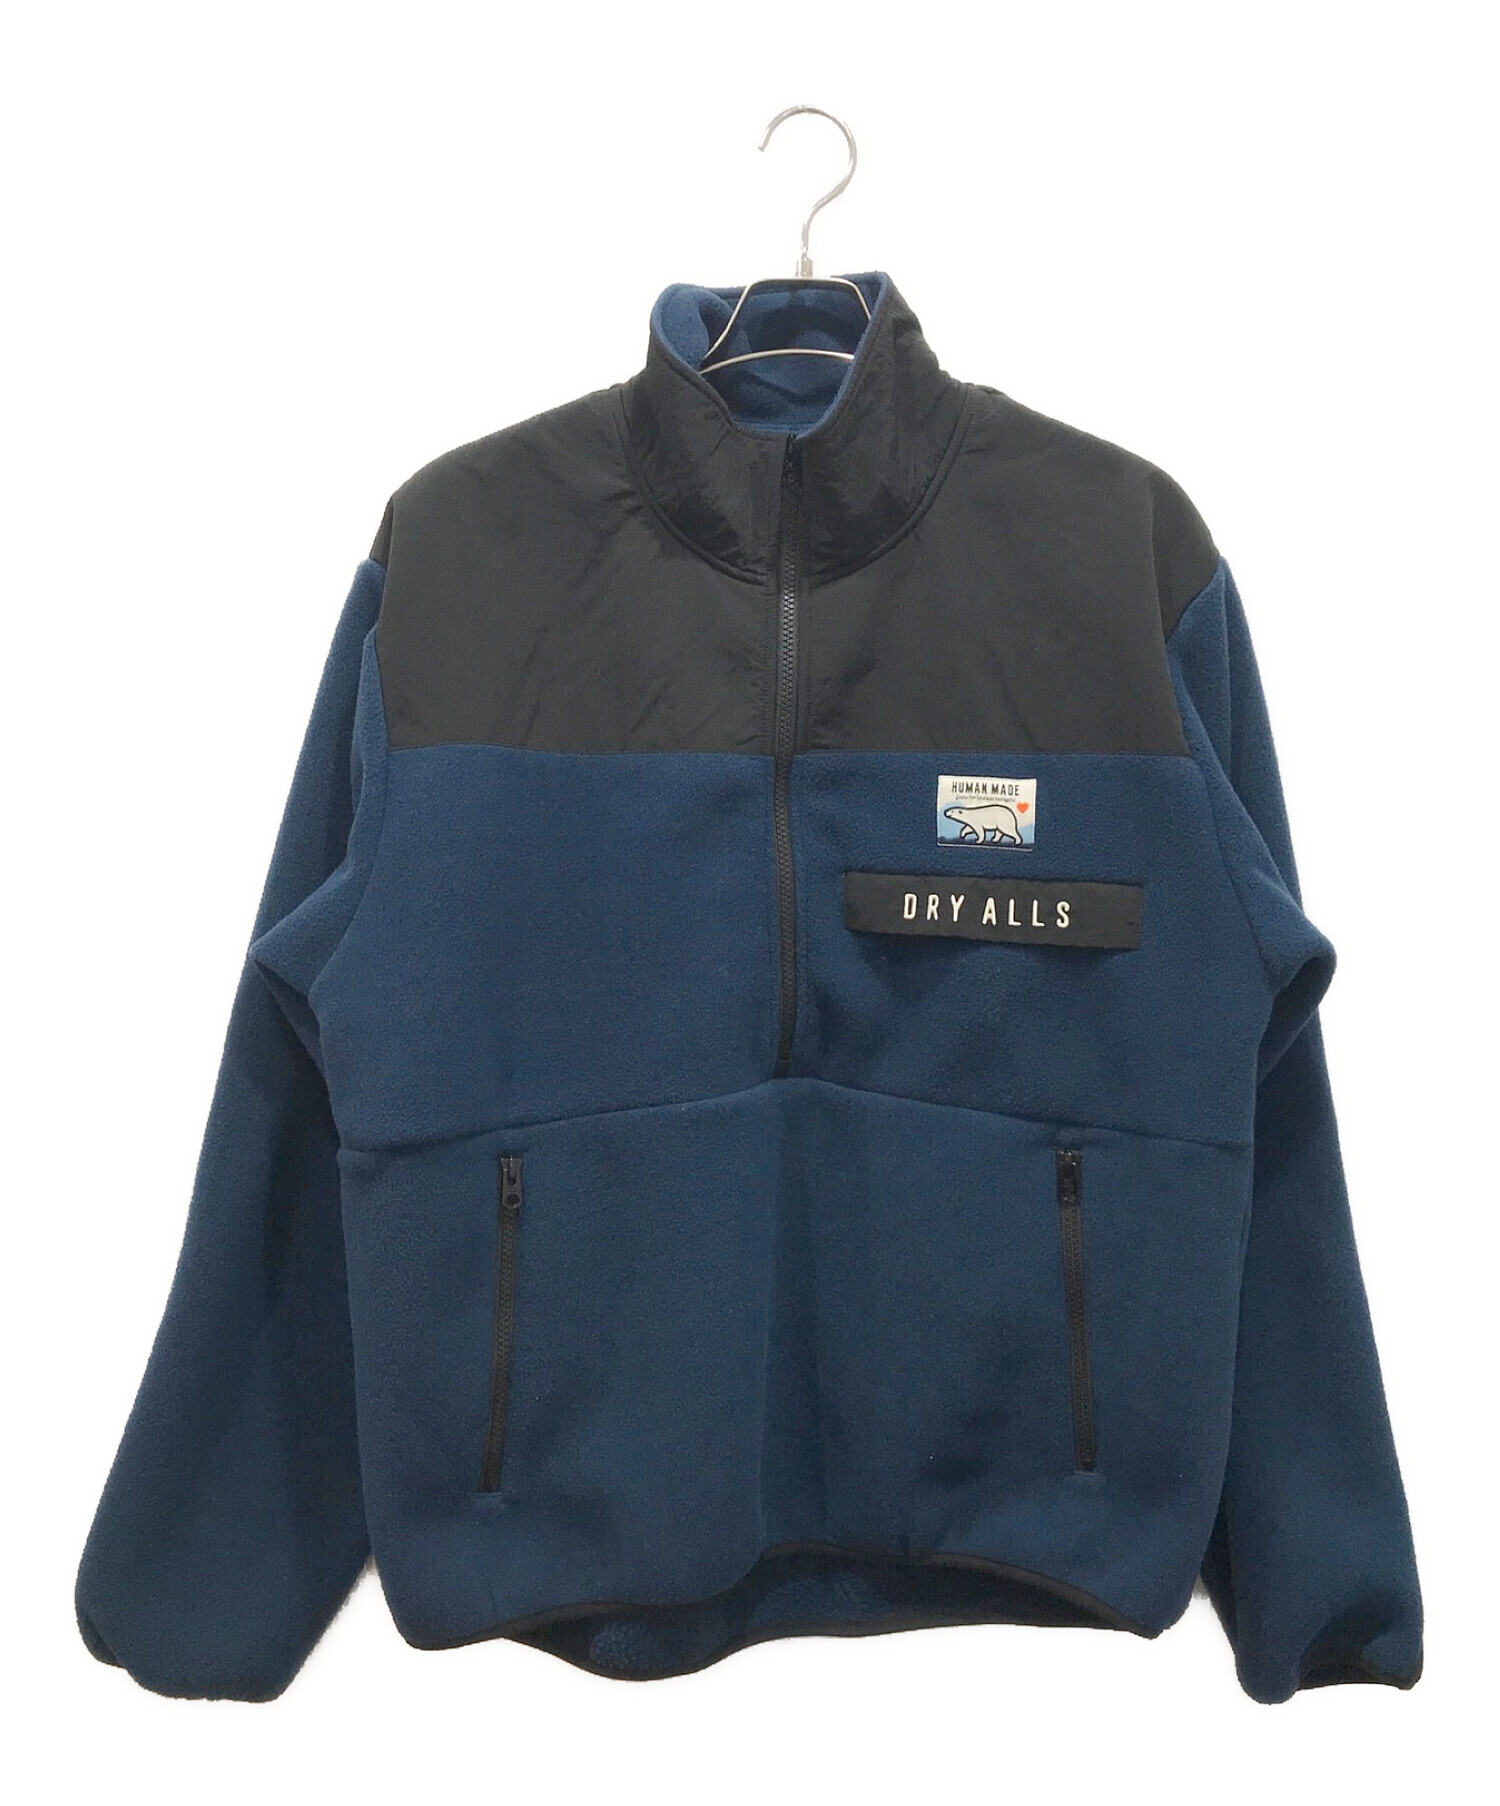 Mサイズ human made fleece jacket フリースジャケットメンズ - ブルゾン